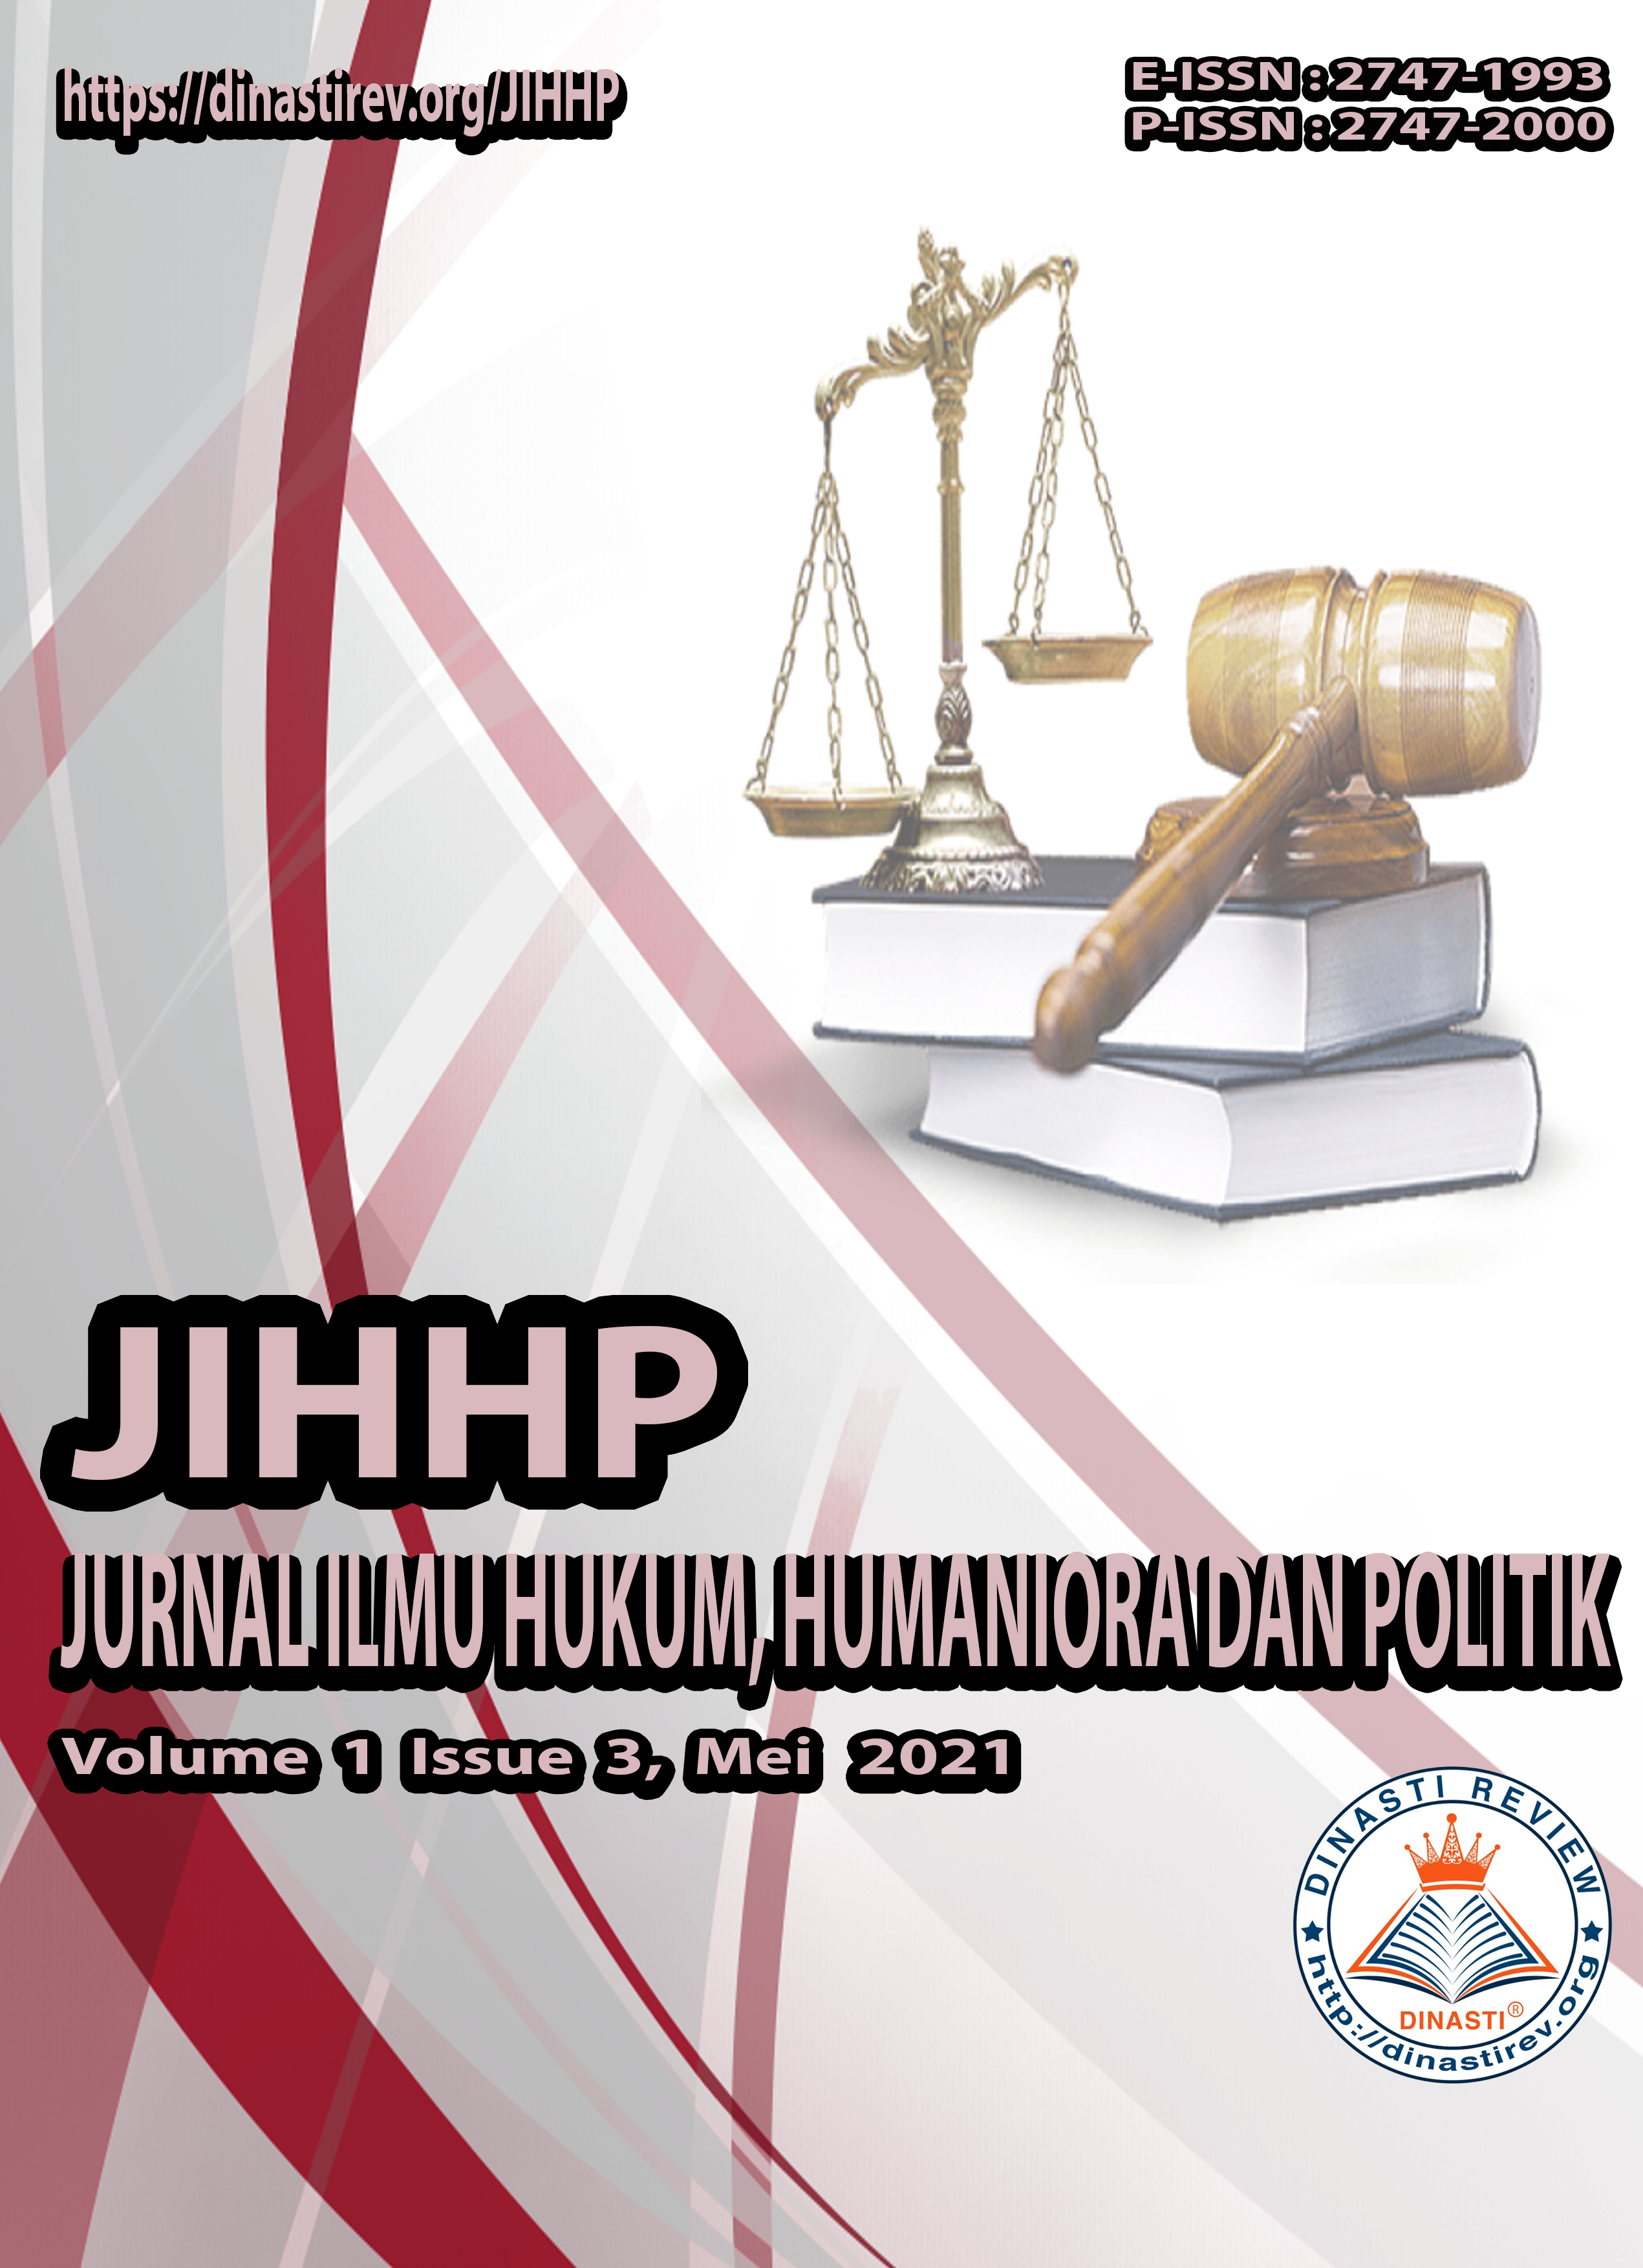 					View Vol. 1 No. 3 (2021): (JIHHP) Jurnal Ilmu Hukum, Humaniora dan Politik (Mei 2021)
				